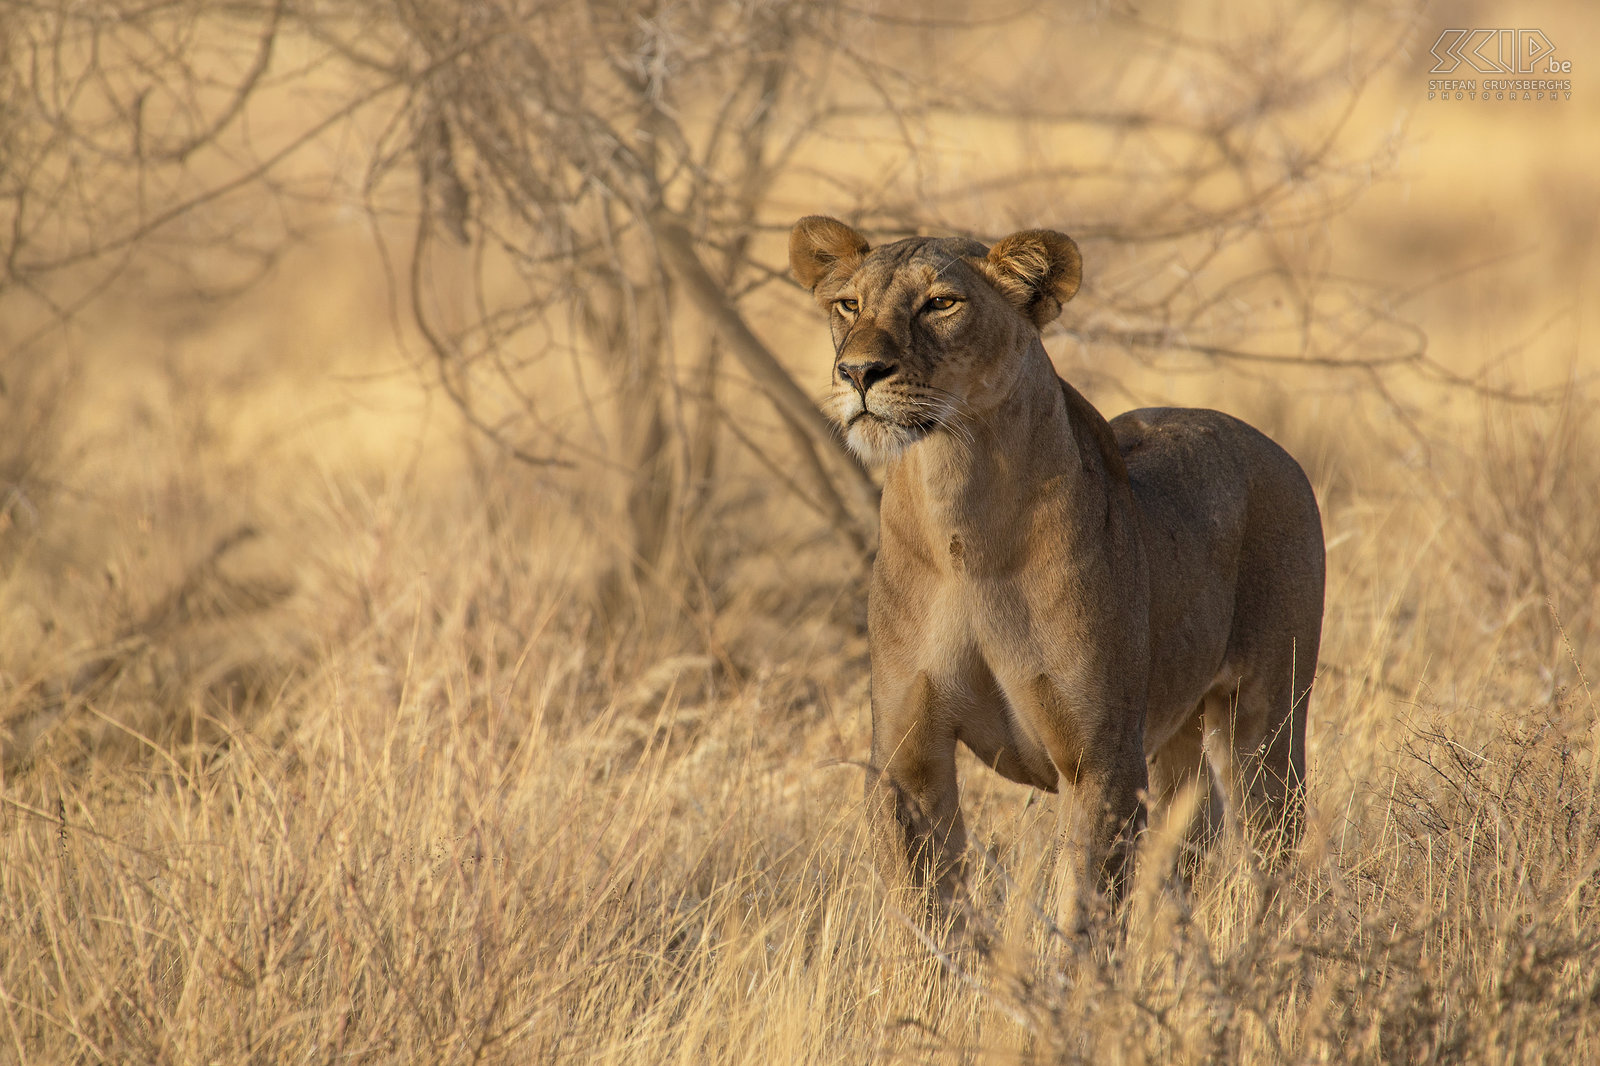 Samburu - Lioness The last morning we saw two lionesses walking around. Stefan Cruysberghs